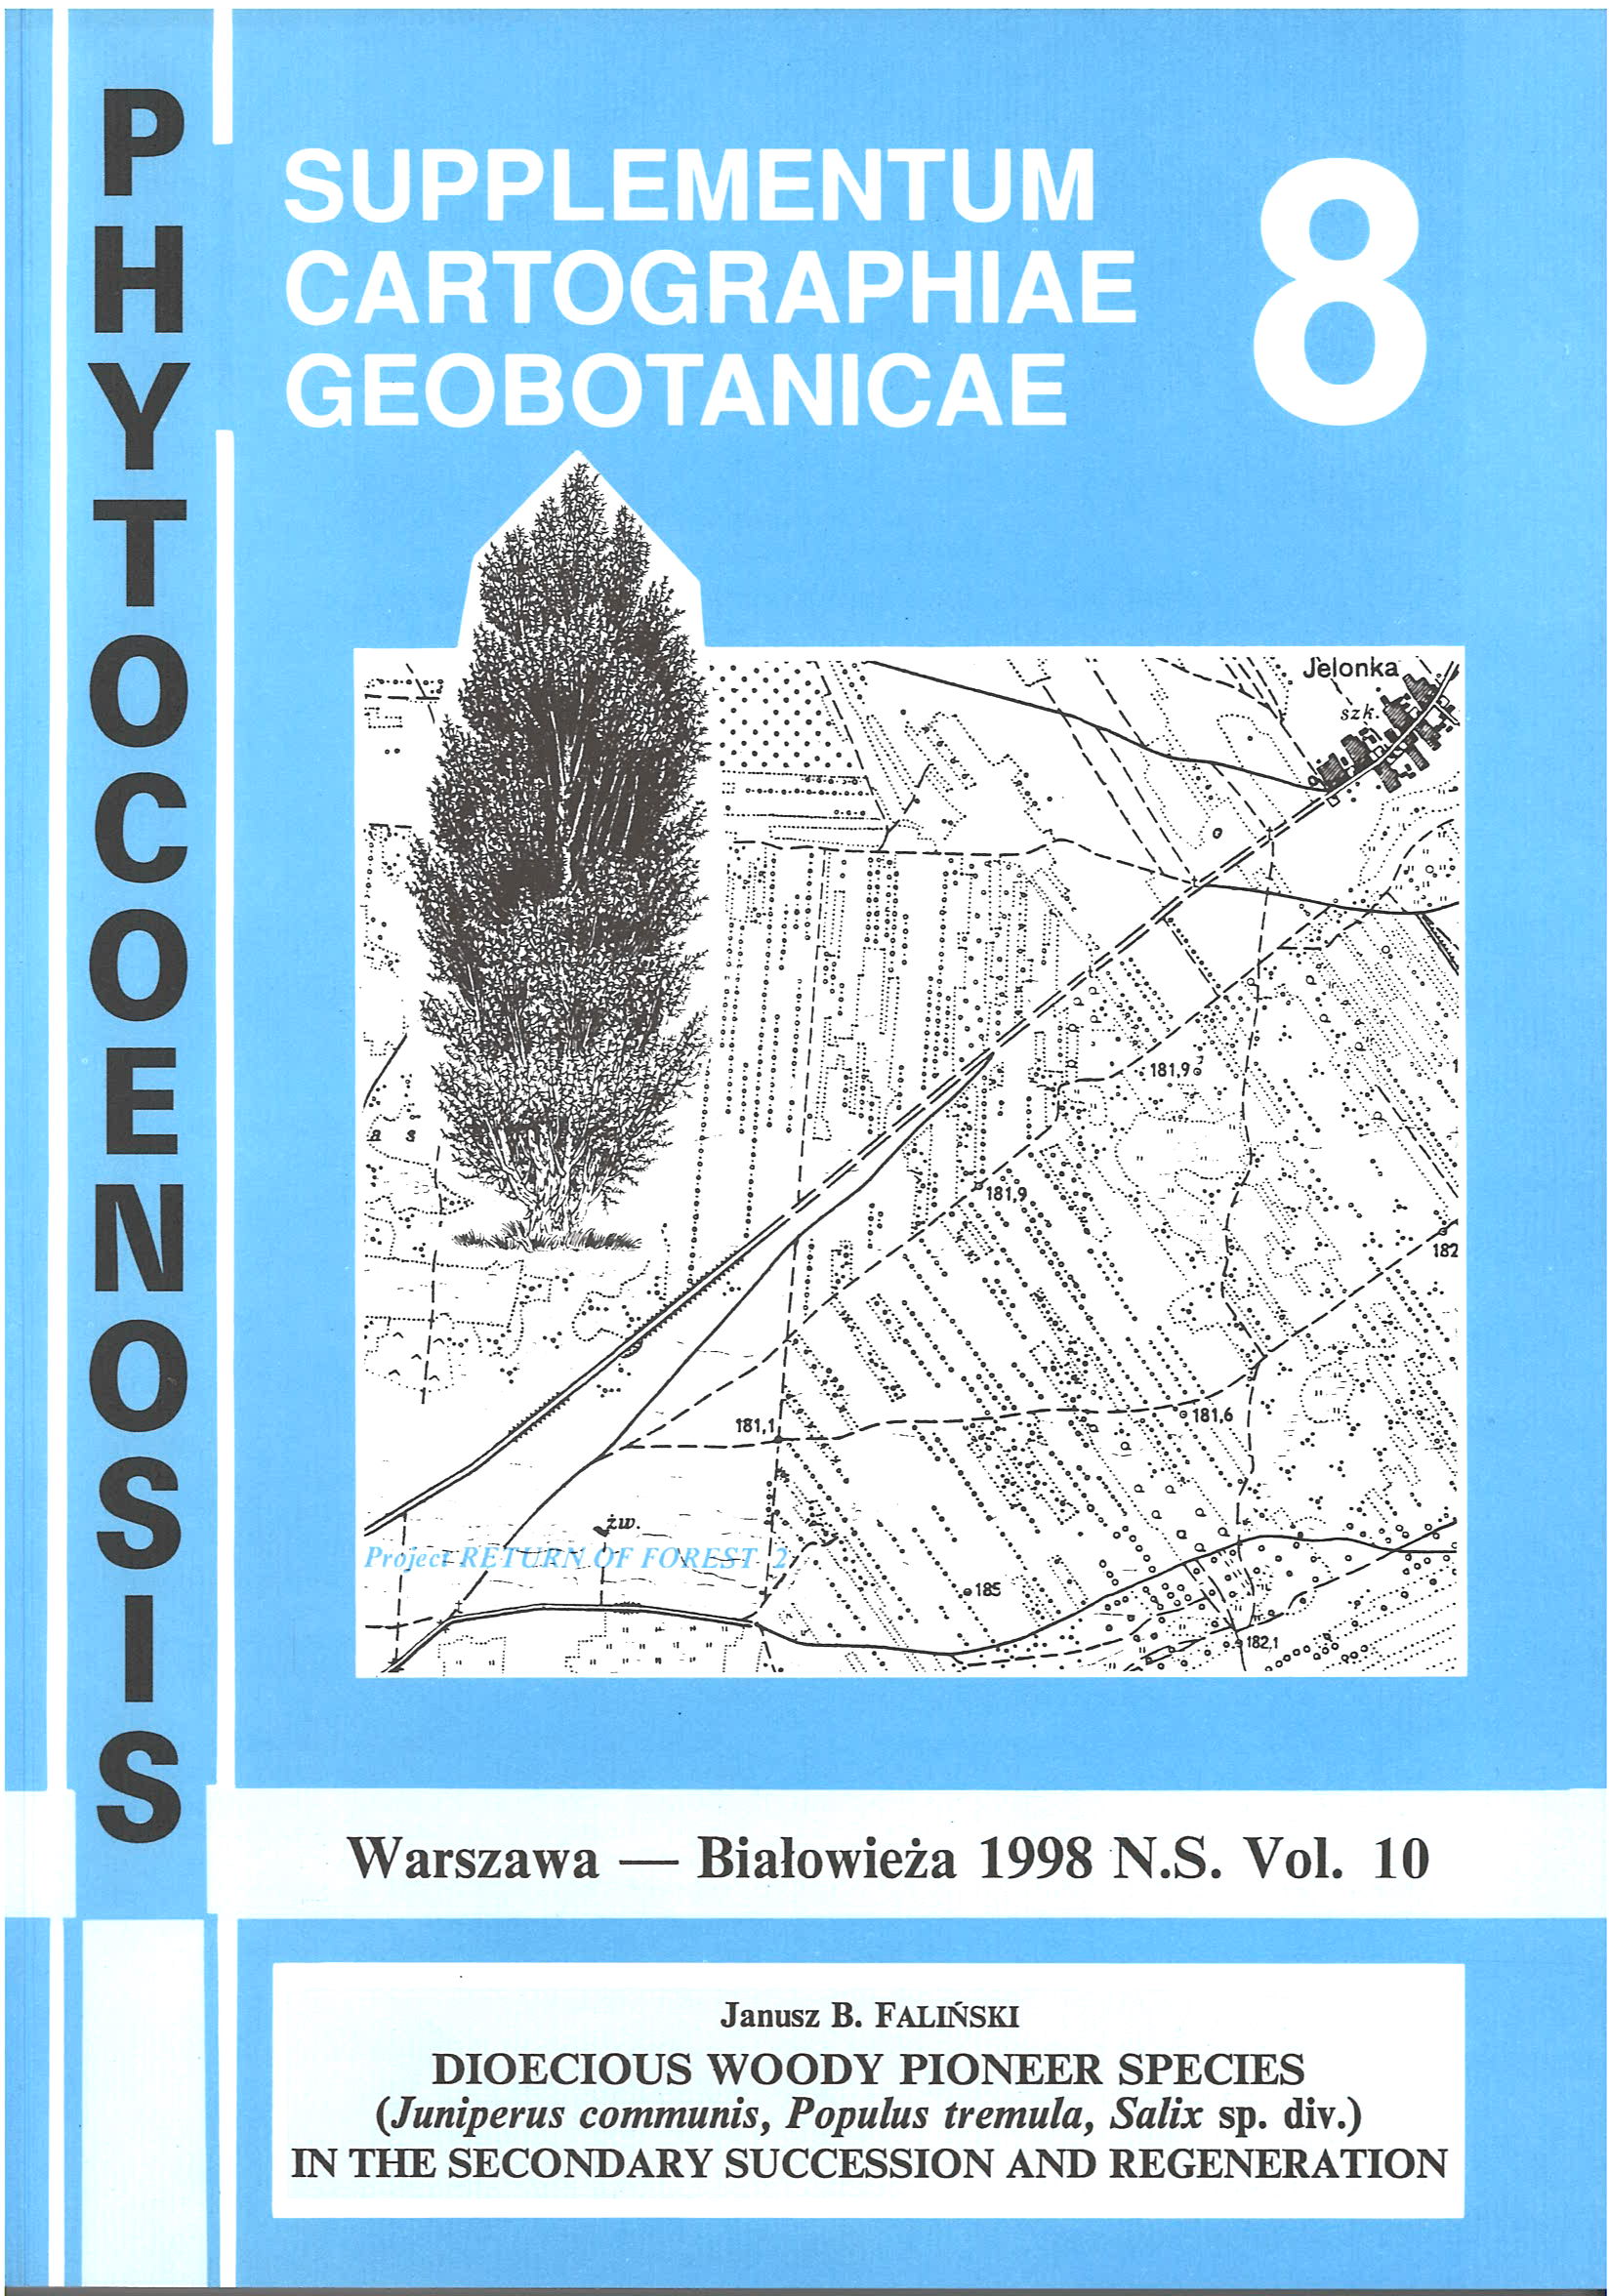 Phytocoenosis (N.S.) 10, Supplementum Cartographiae Geobotanicae 8